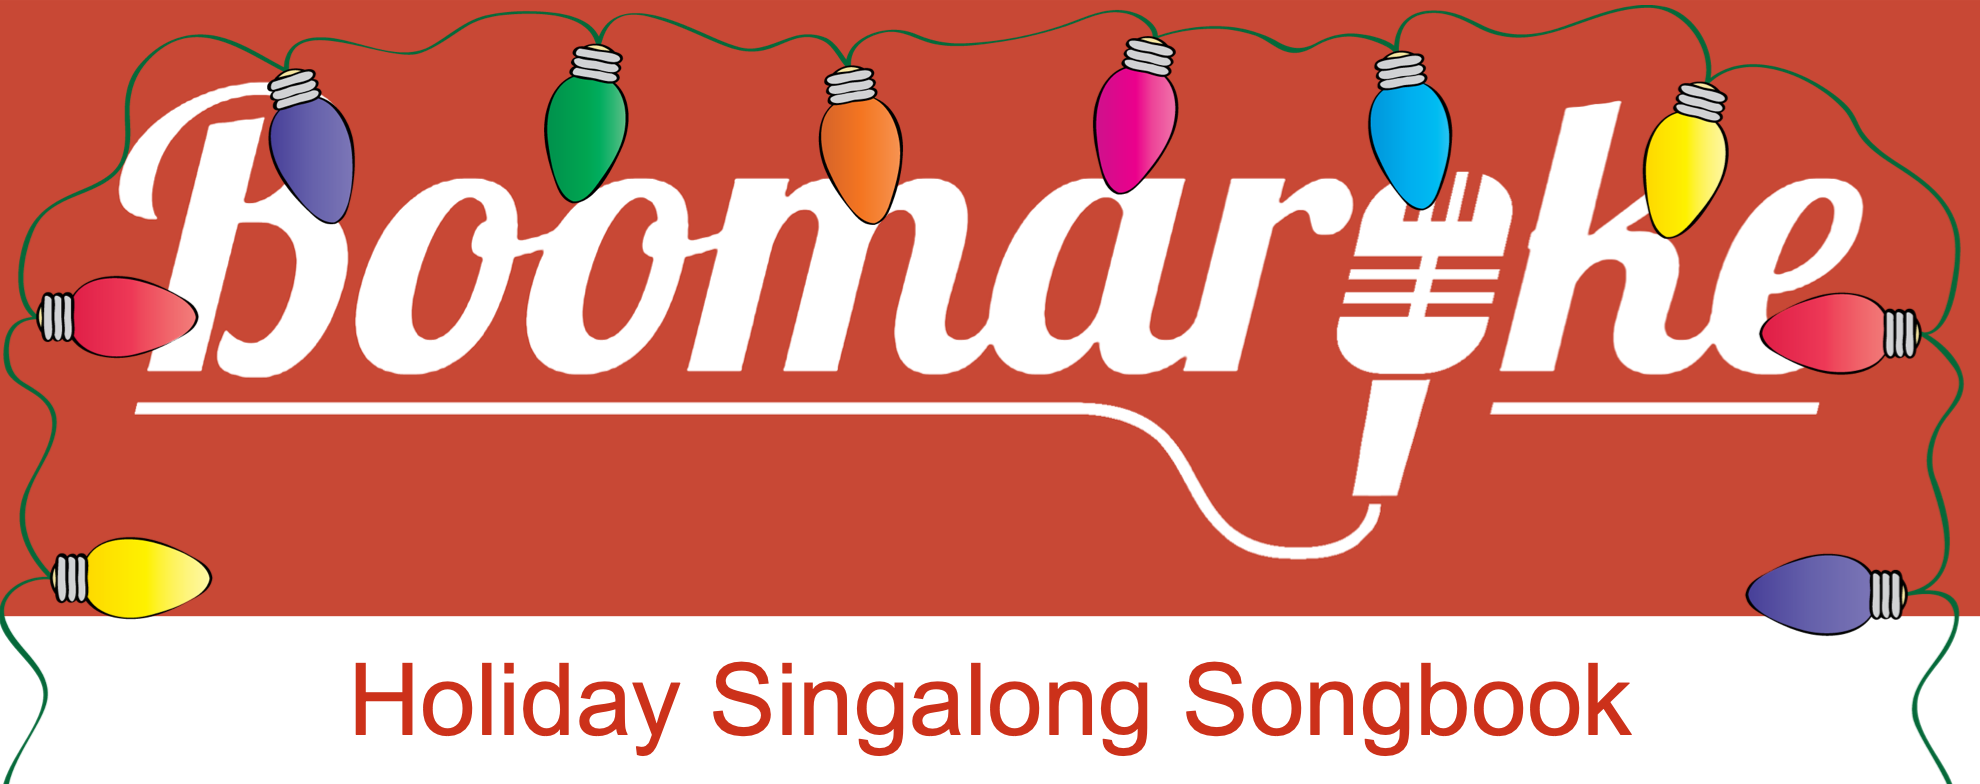 boomaroke holiday songbook logo